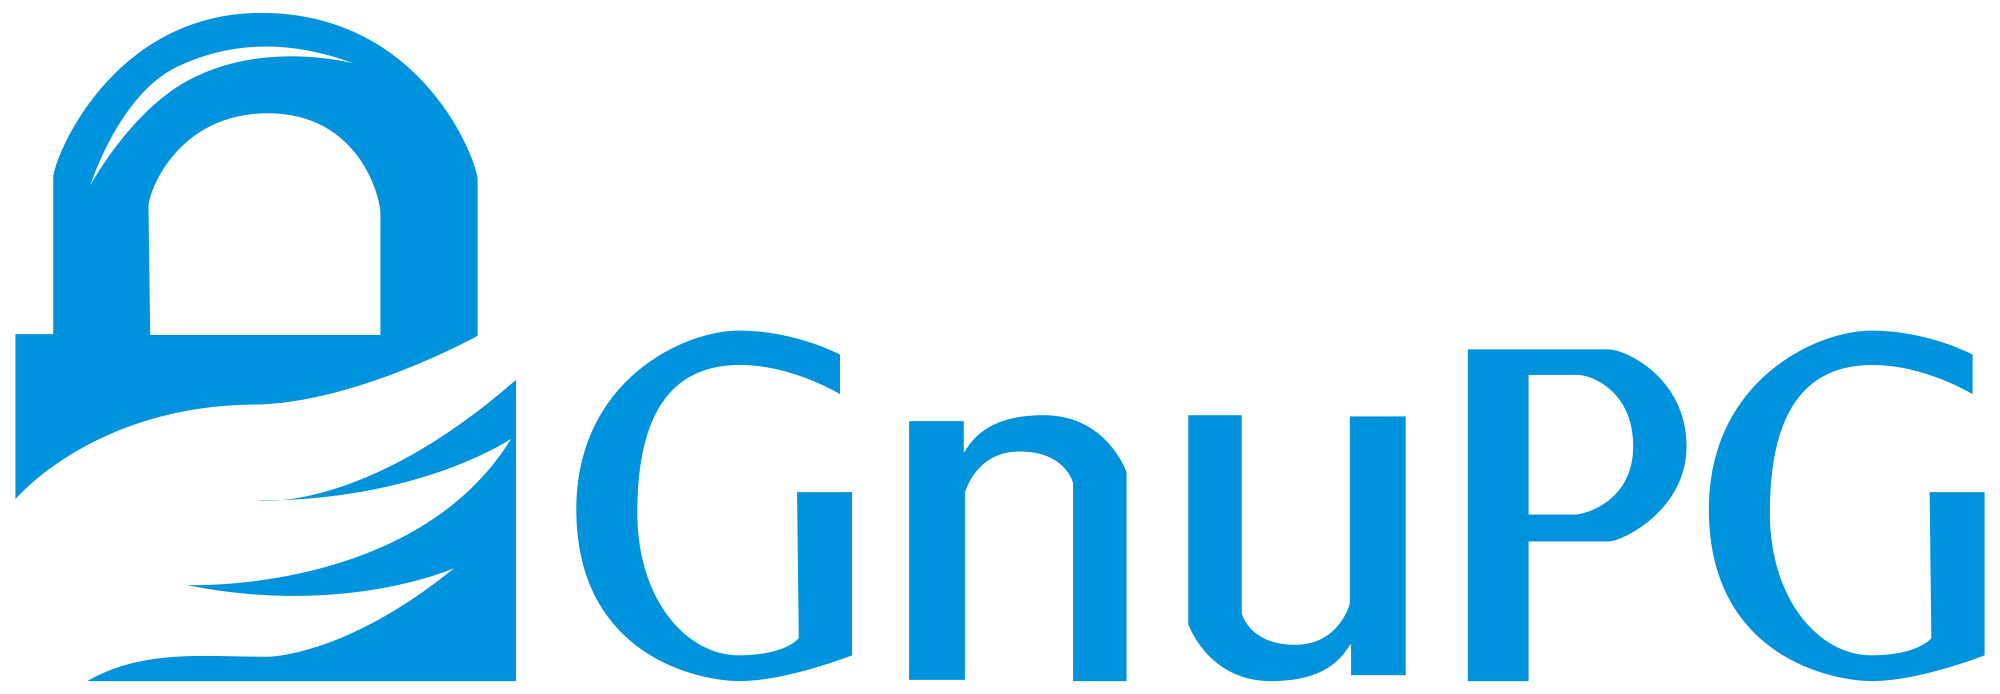 GnuPG